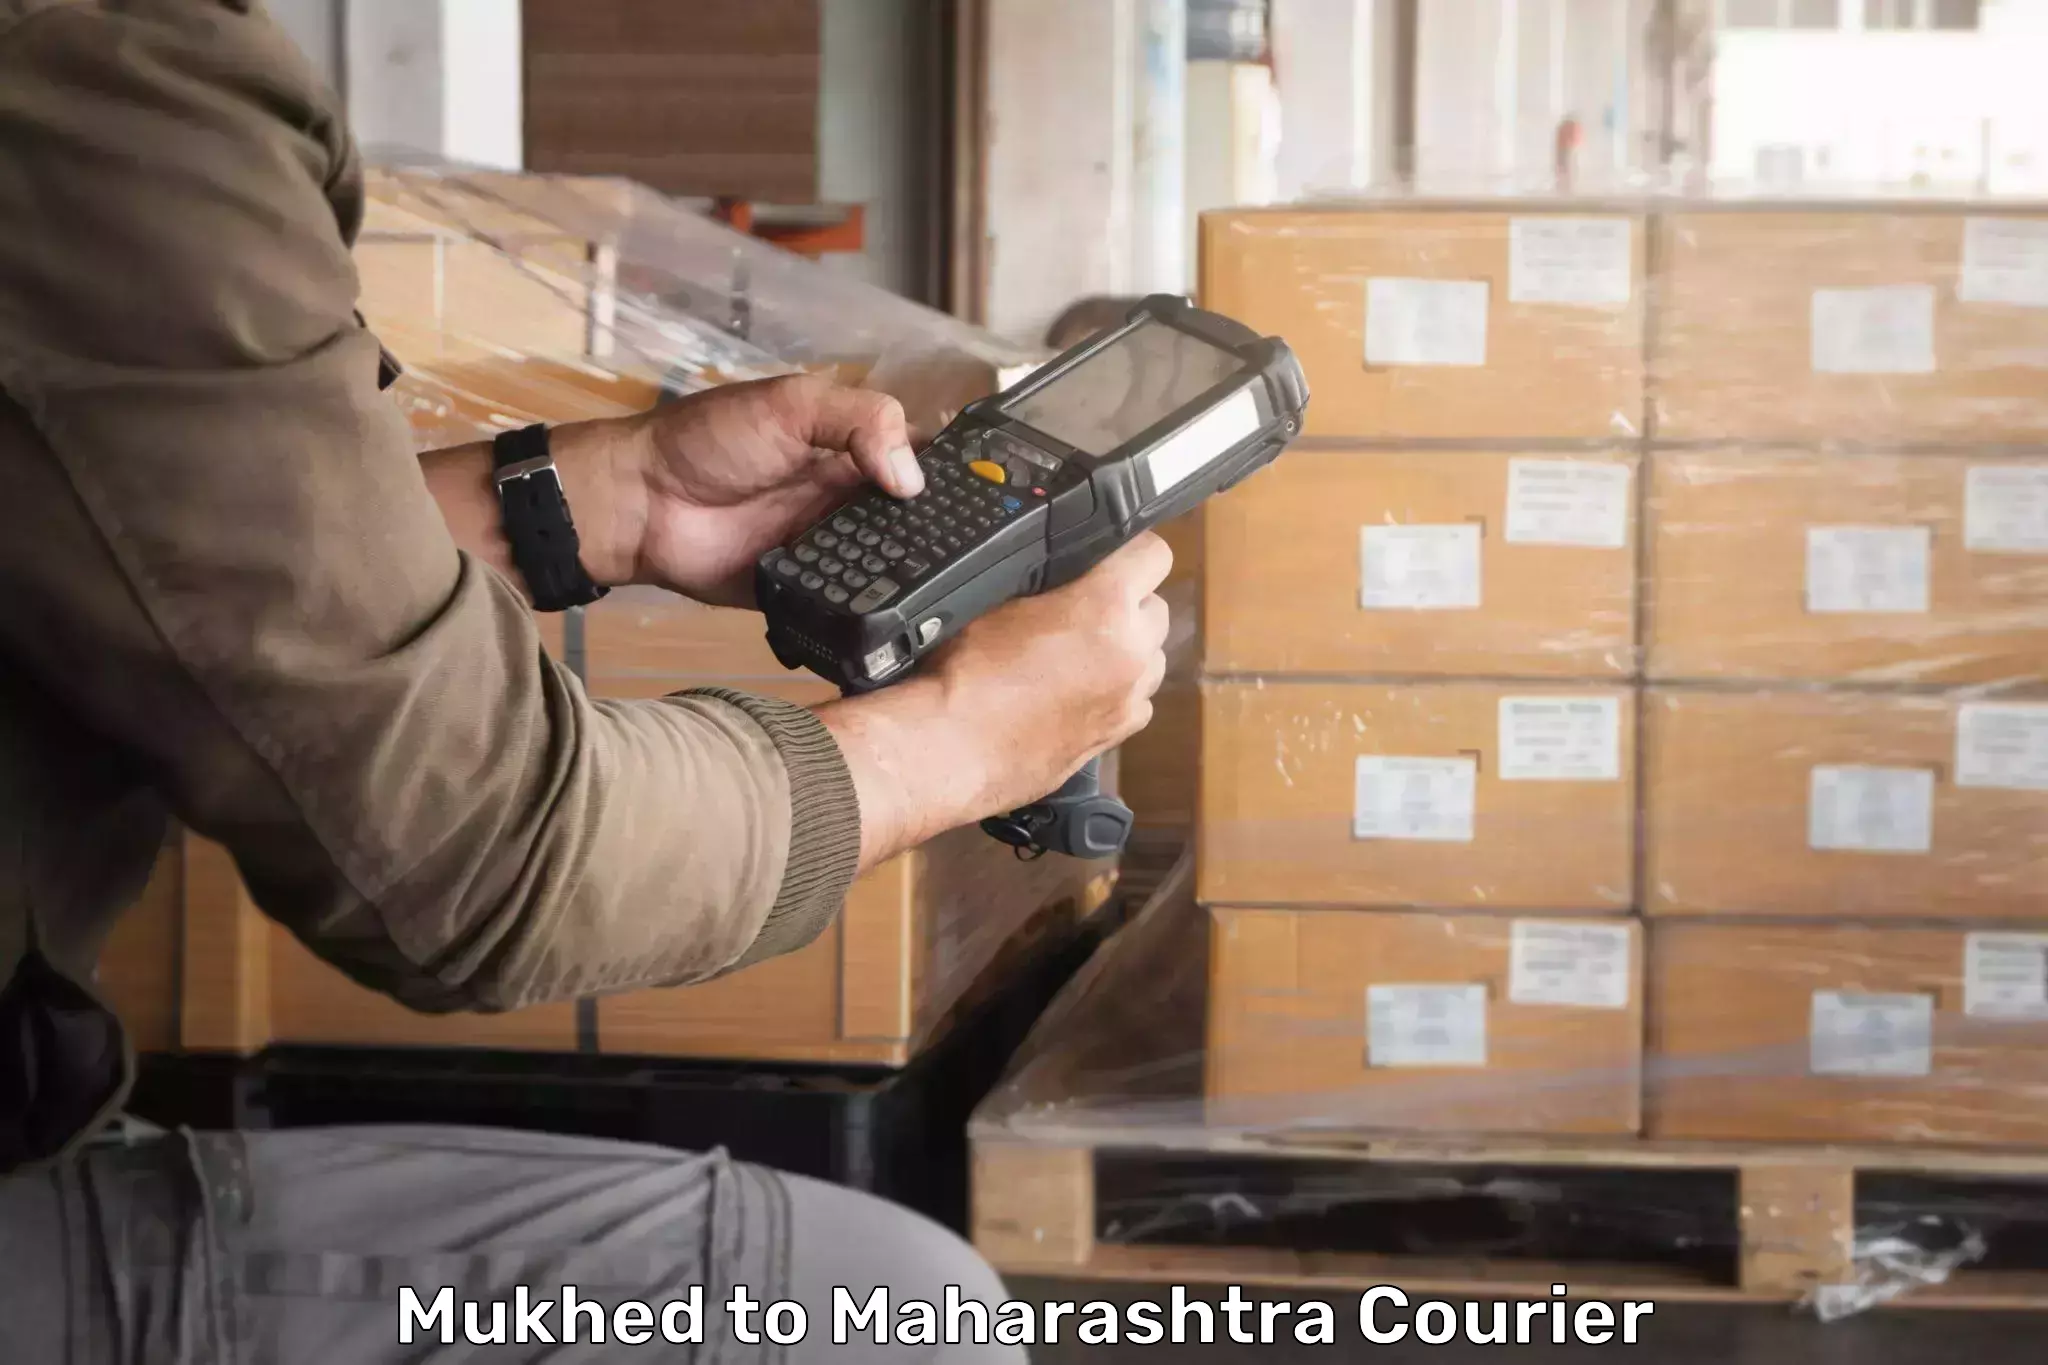 Quick dispatch service Mukhed to Mumbai